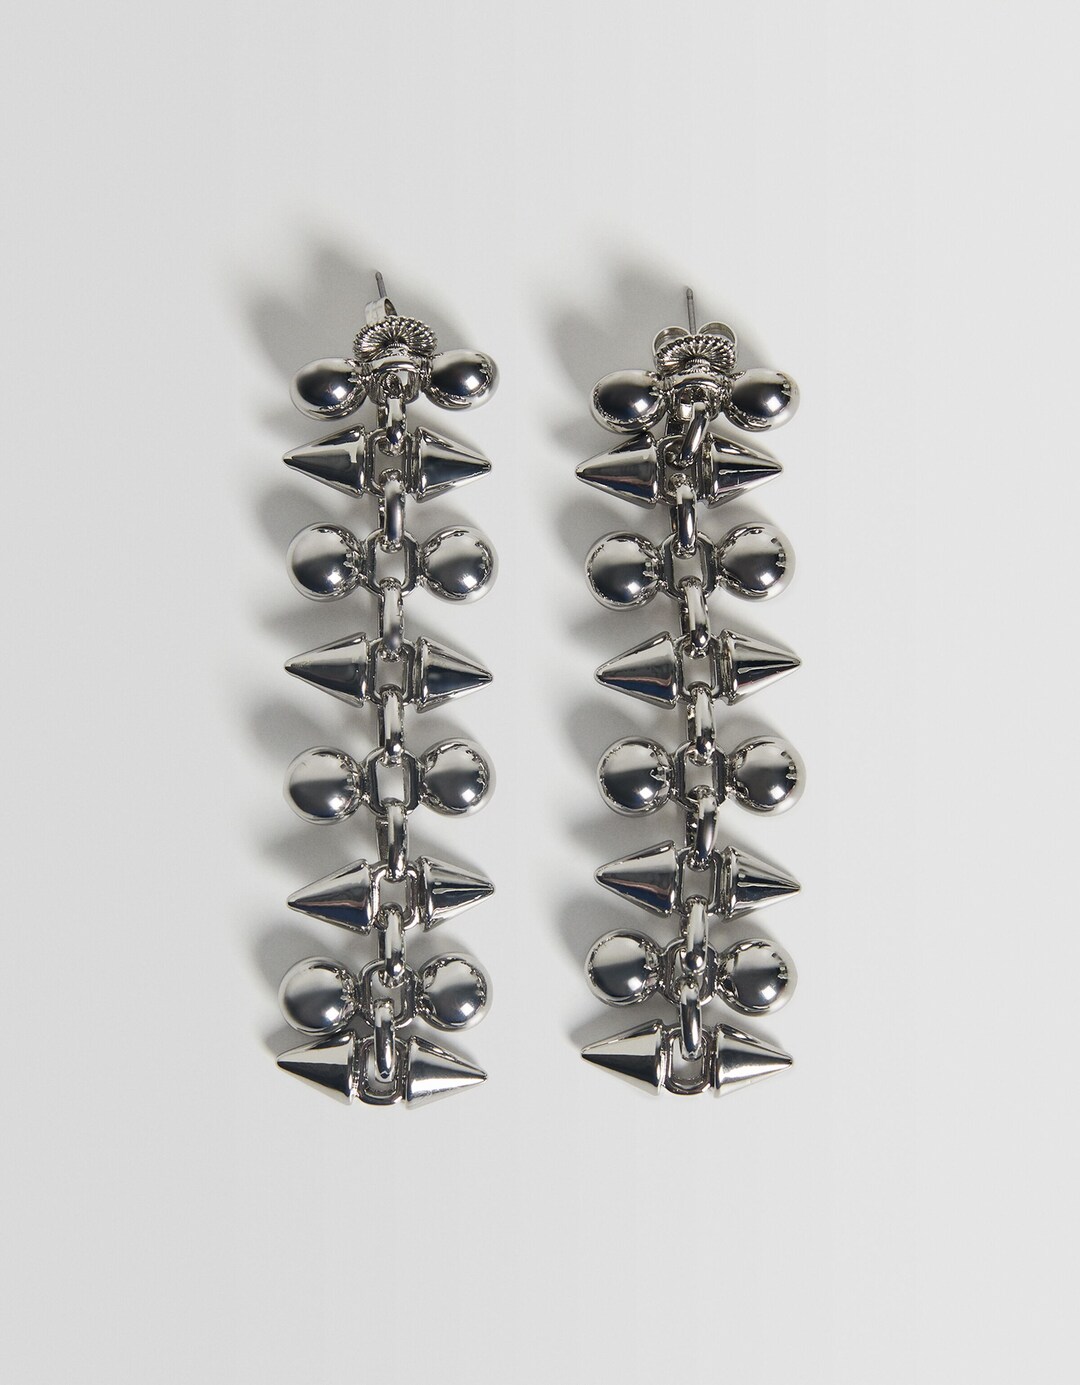 Generation Bershka earrings with spikes